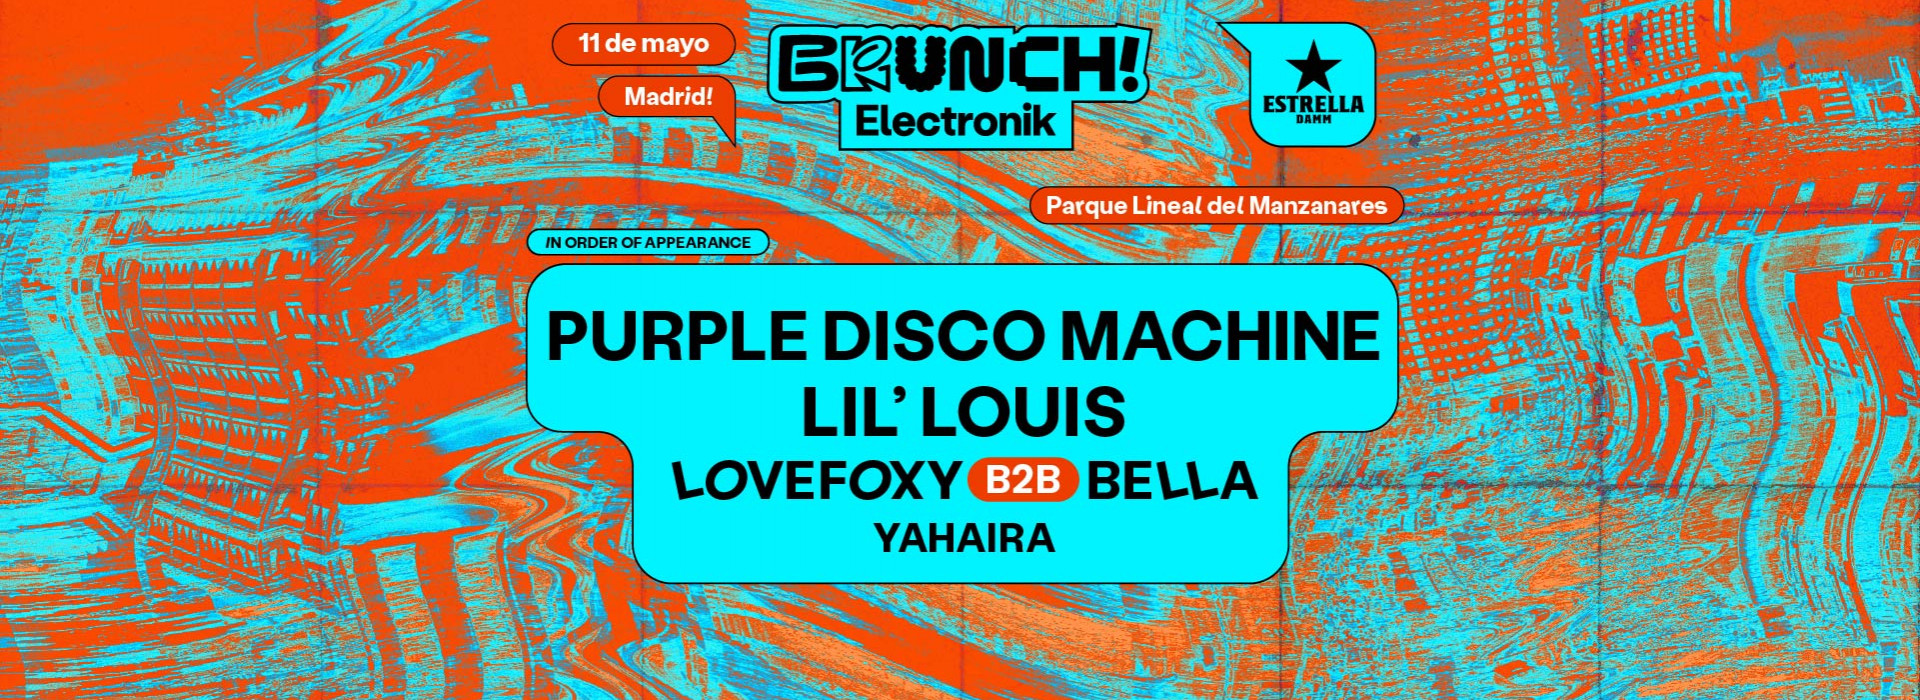 Brunch Electronik Madrid #2: Purple Disco Machine, Lil' Louis y más